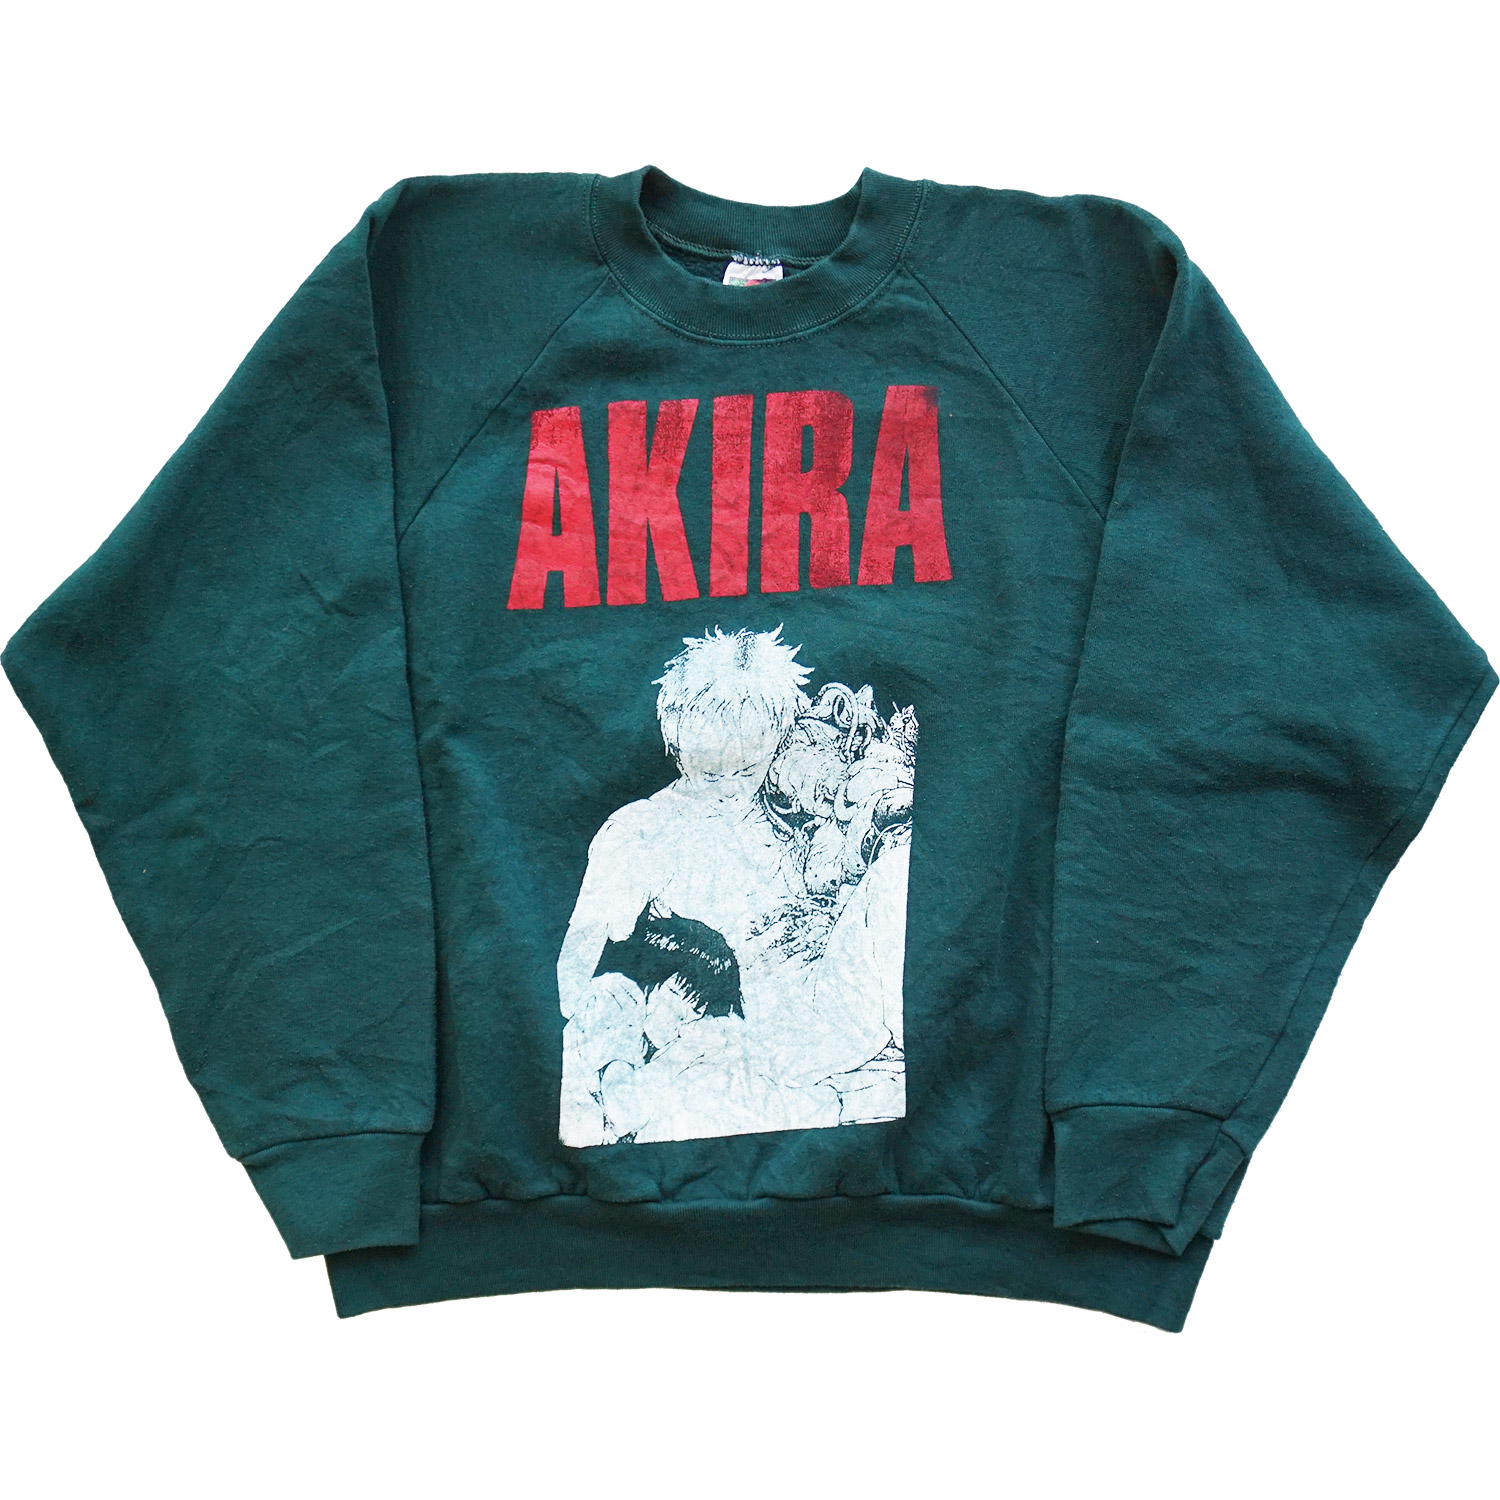 Akira Movie Bootleg Sweatshirt, Front